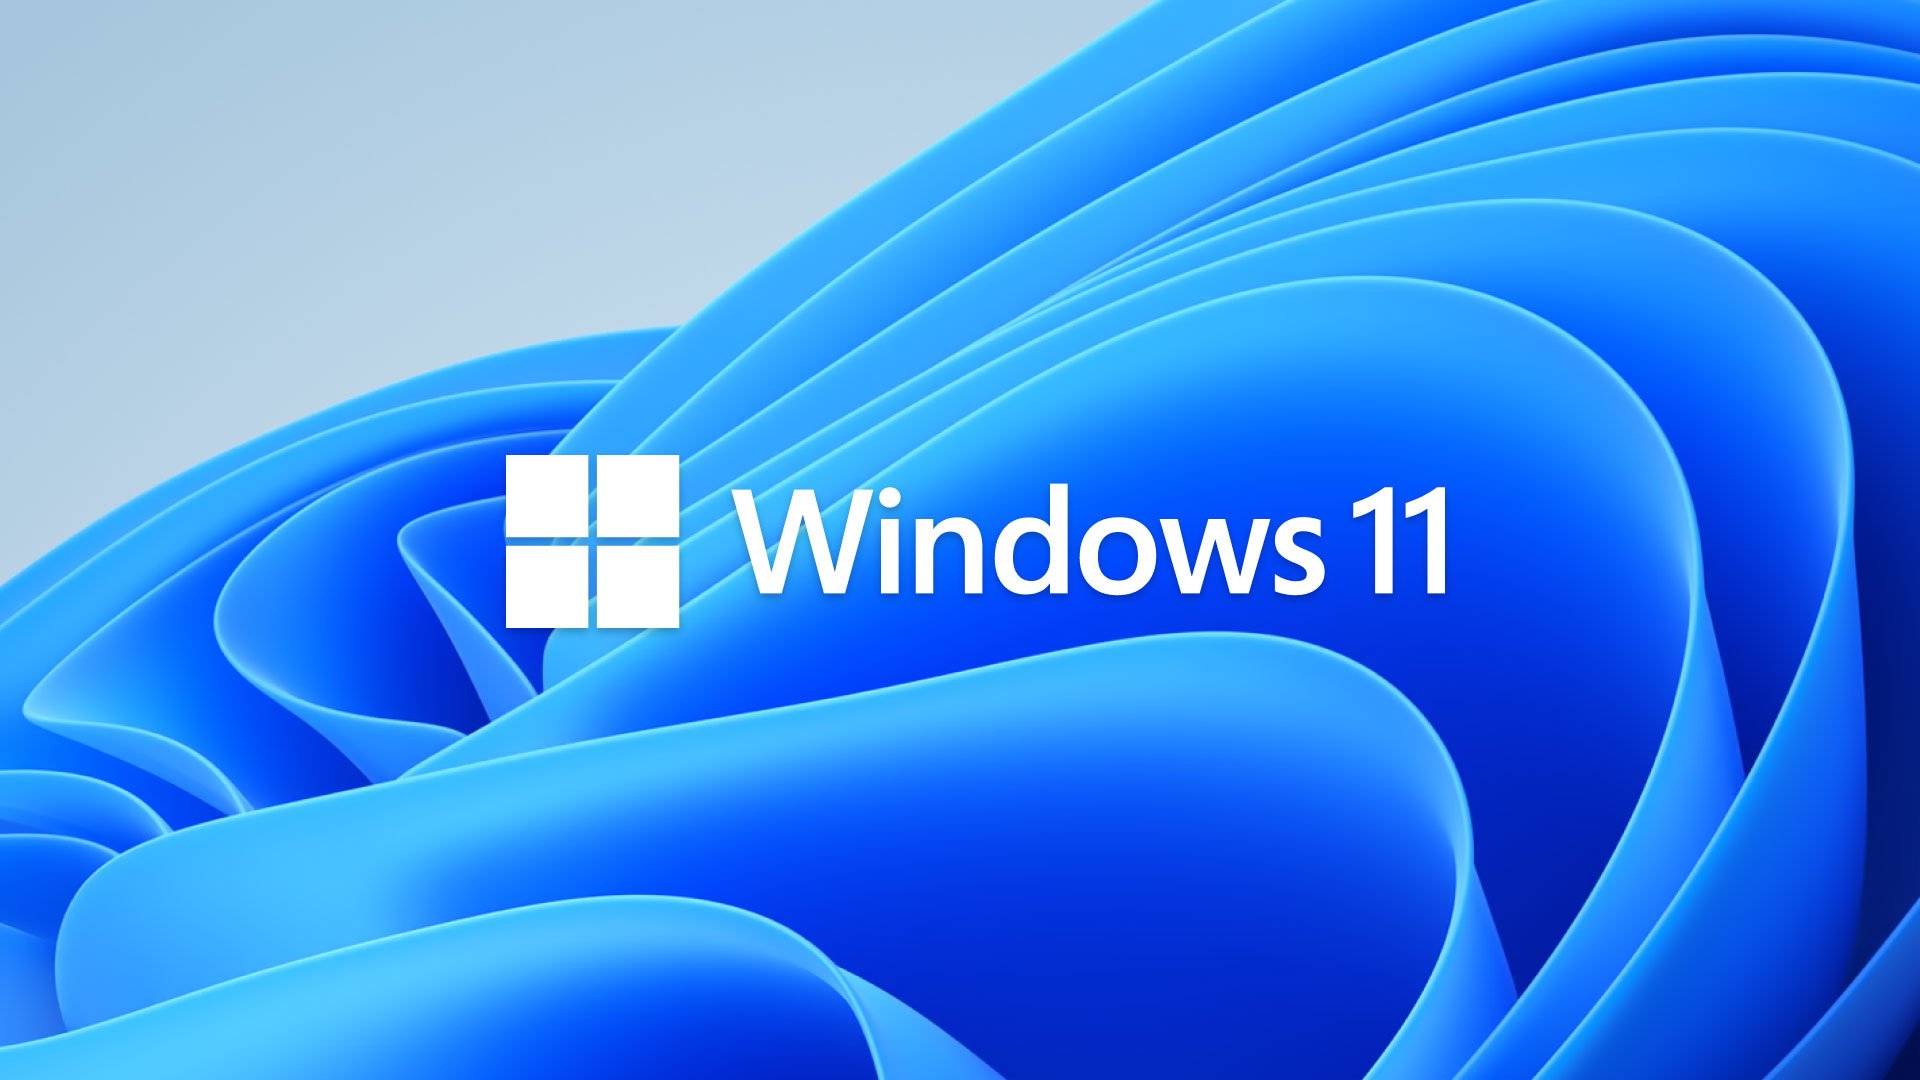 https://images.frandroid.com/wp-content/uploads/2021/06/windows-11-logo-hero.jpg